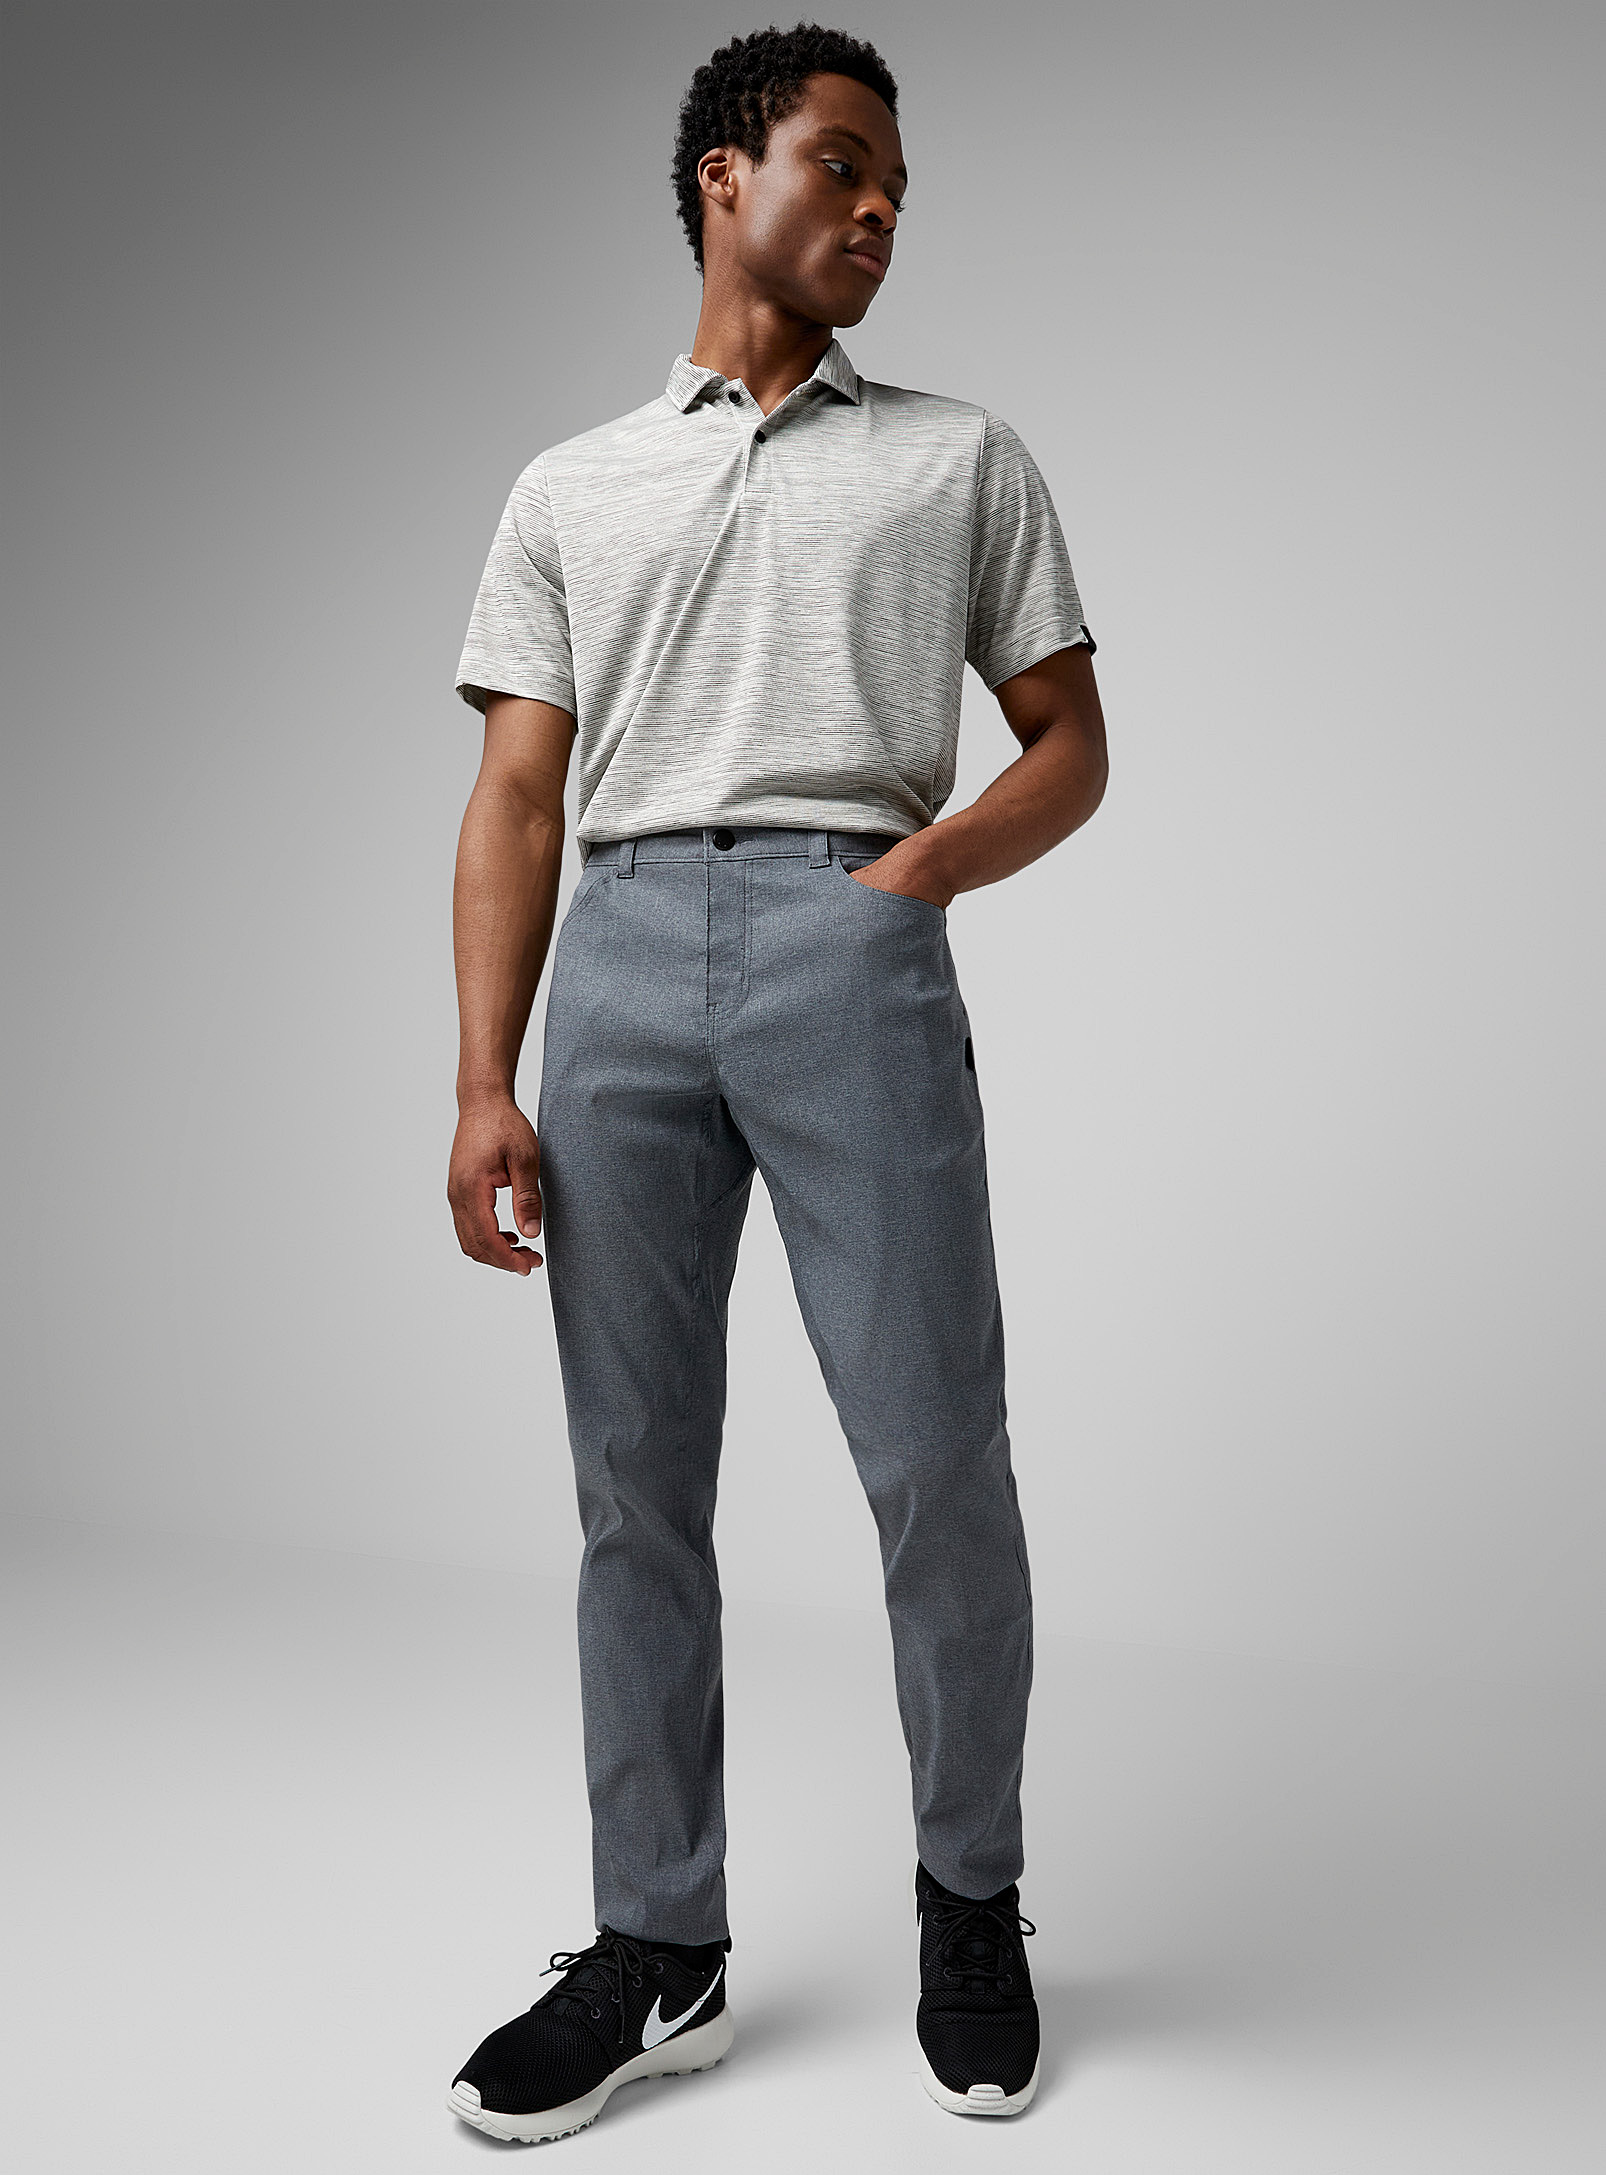 Oakley - Men's Terrain stretch nylon golf pant